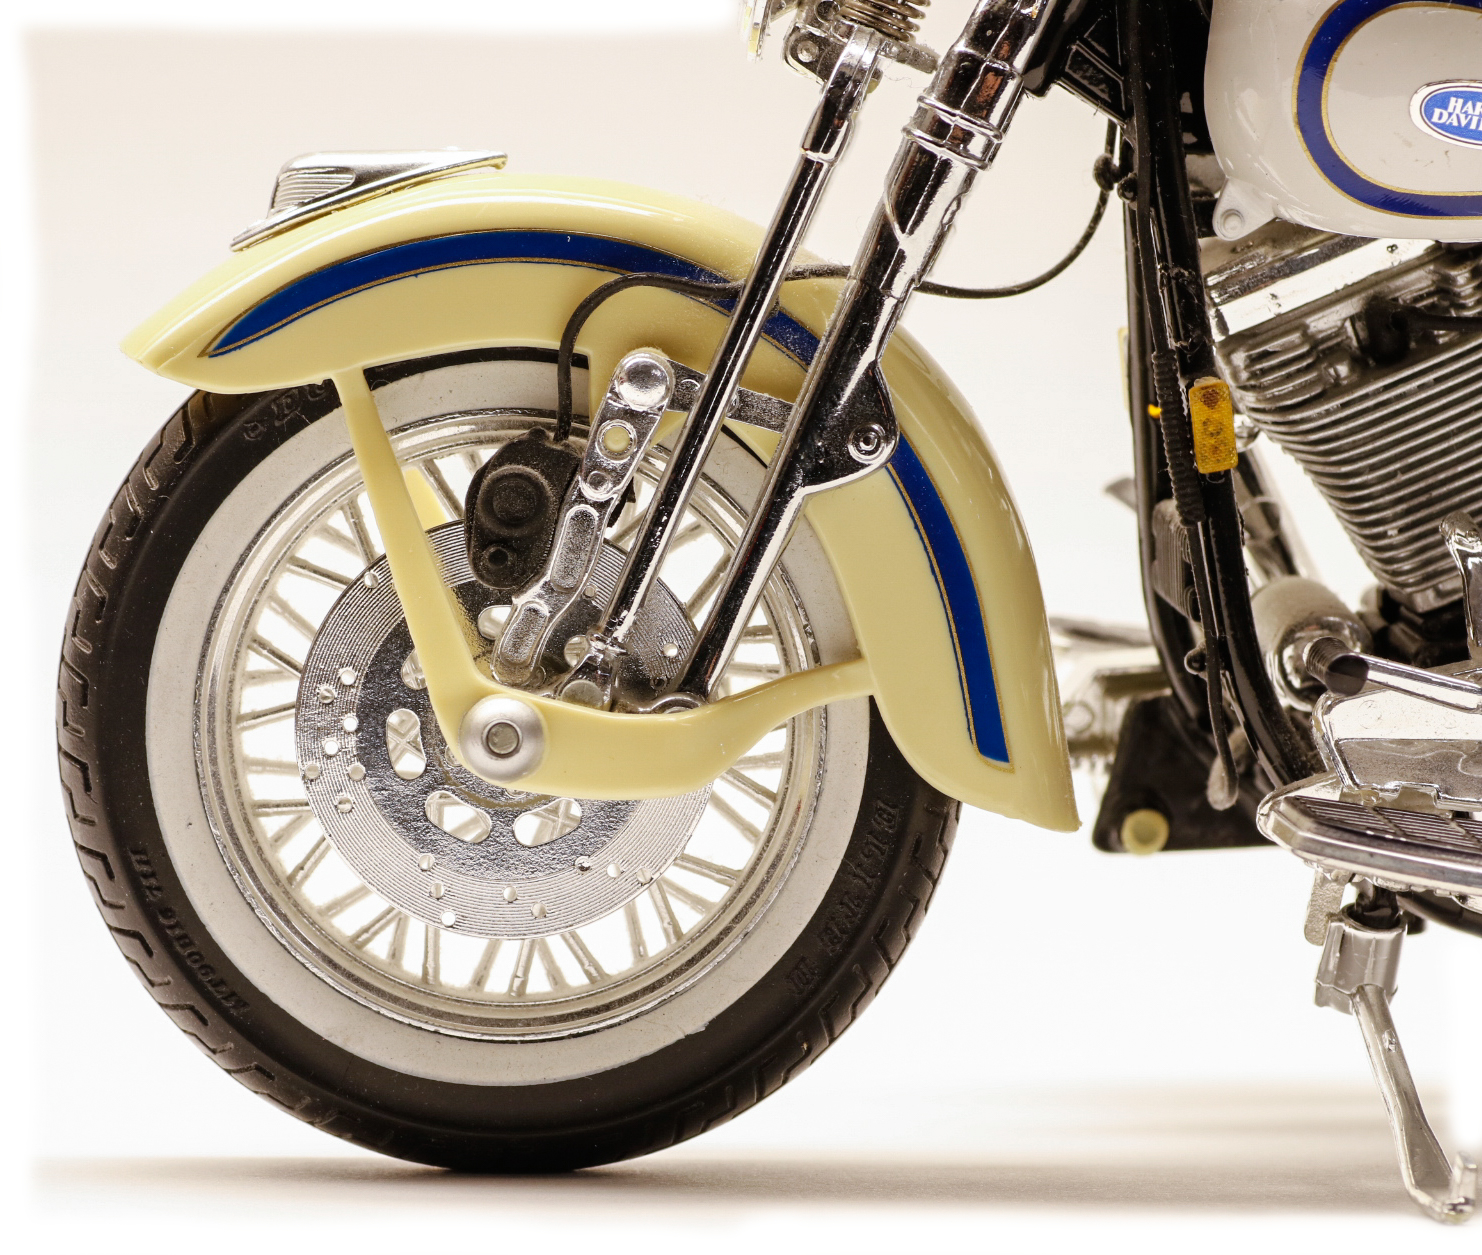 Maisto Harley Davidson FLSTS Heritage Springer